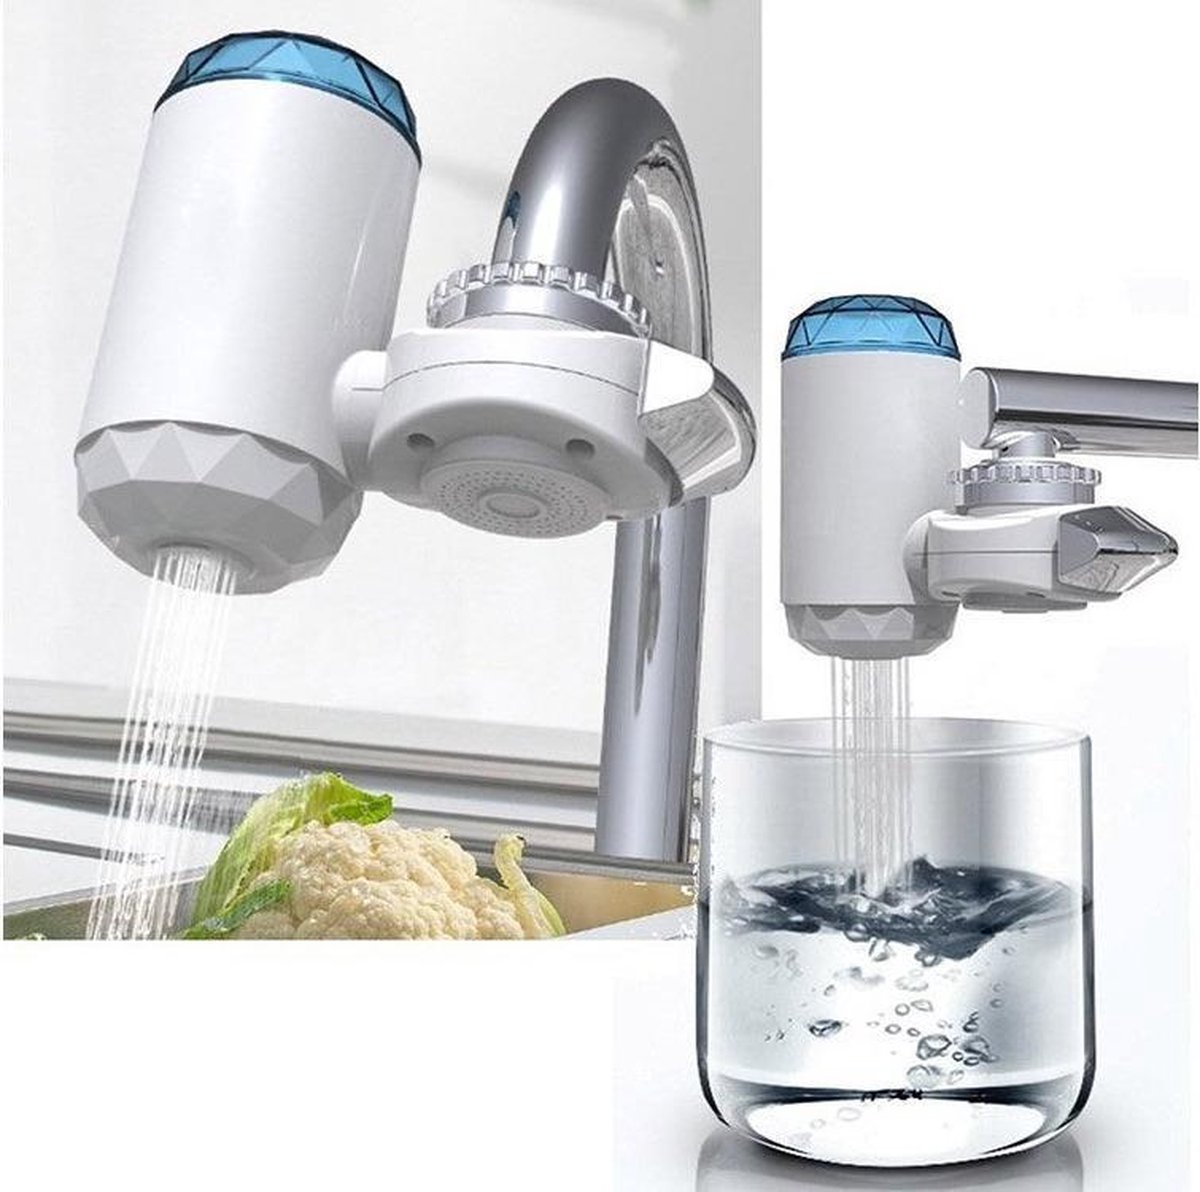 Kraanfilter - Waterfilter -Filtersysteem- Drinkbaar Water -Filtersysteem - Waterzuivering voor schoon drinkwater!